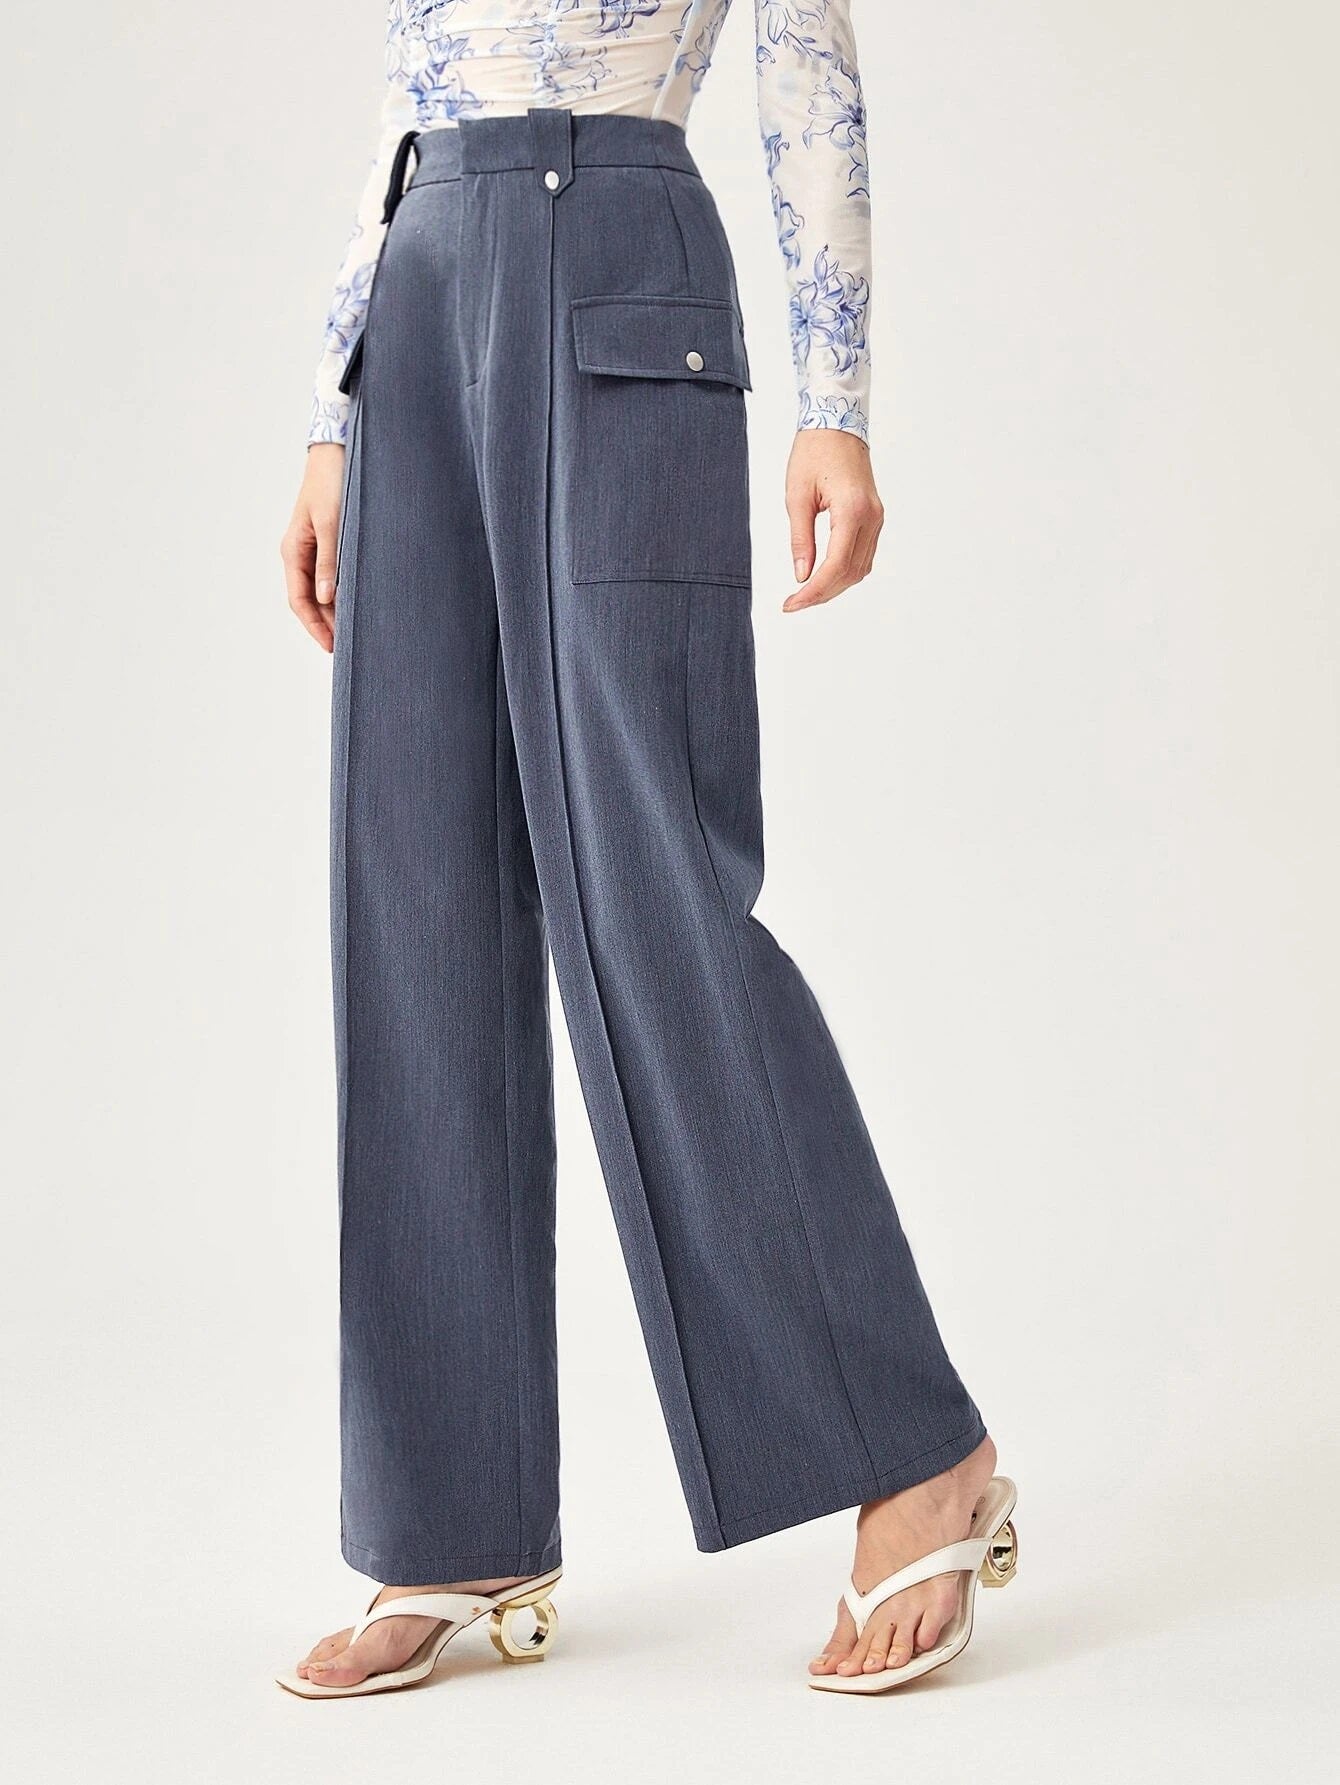 CM-BS088841 Women Elegant Seoul Style High Waist Flap Pocket Wide Leg Pants - Dusty Blue